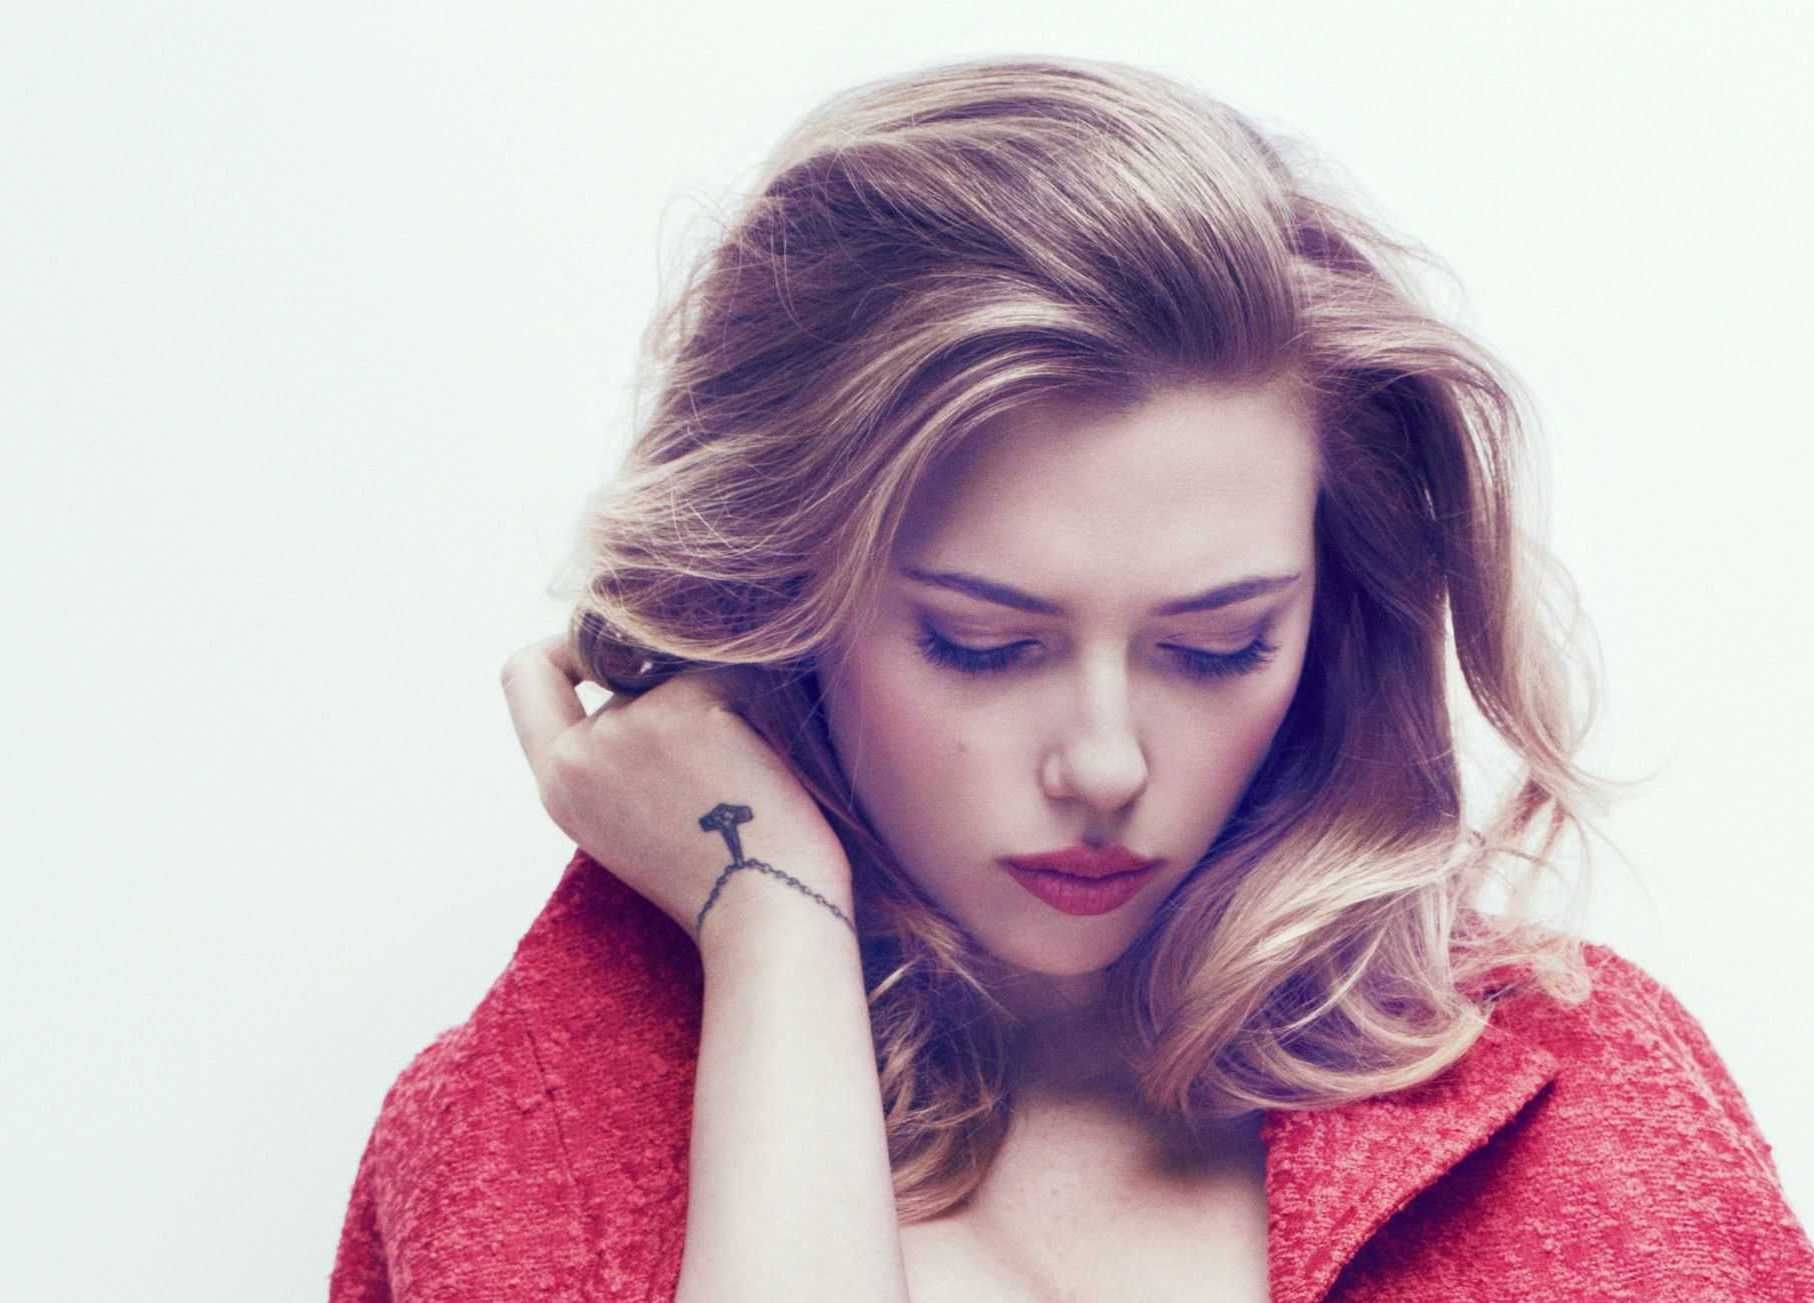 Download Curvy Licious Scarlett Johansson Wallpaper in HD